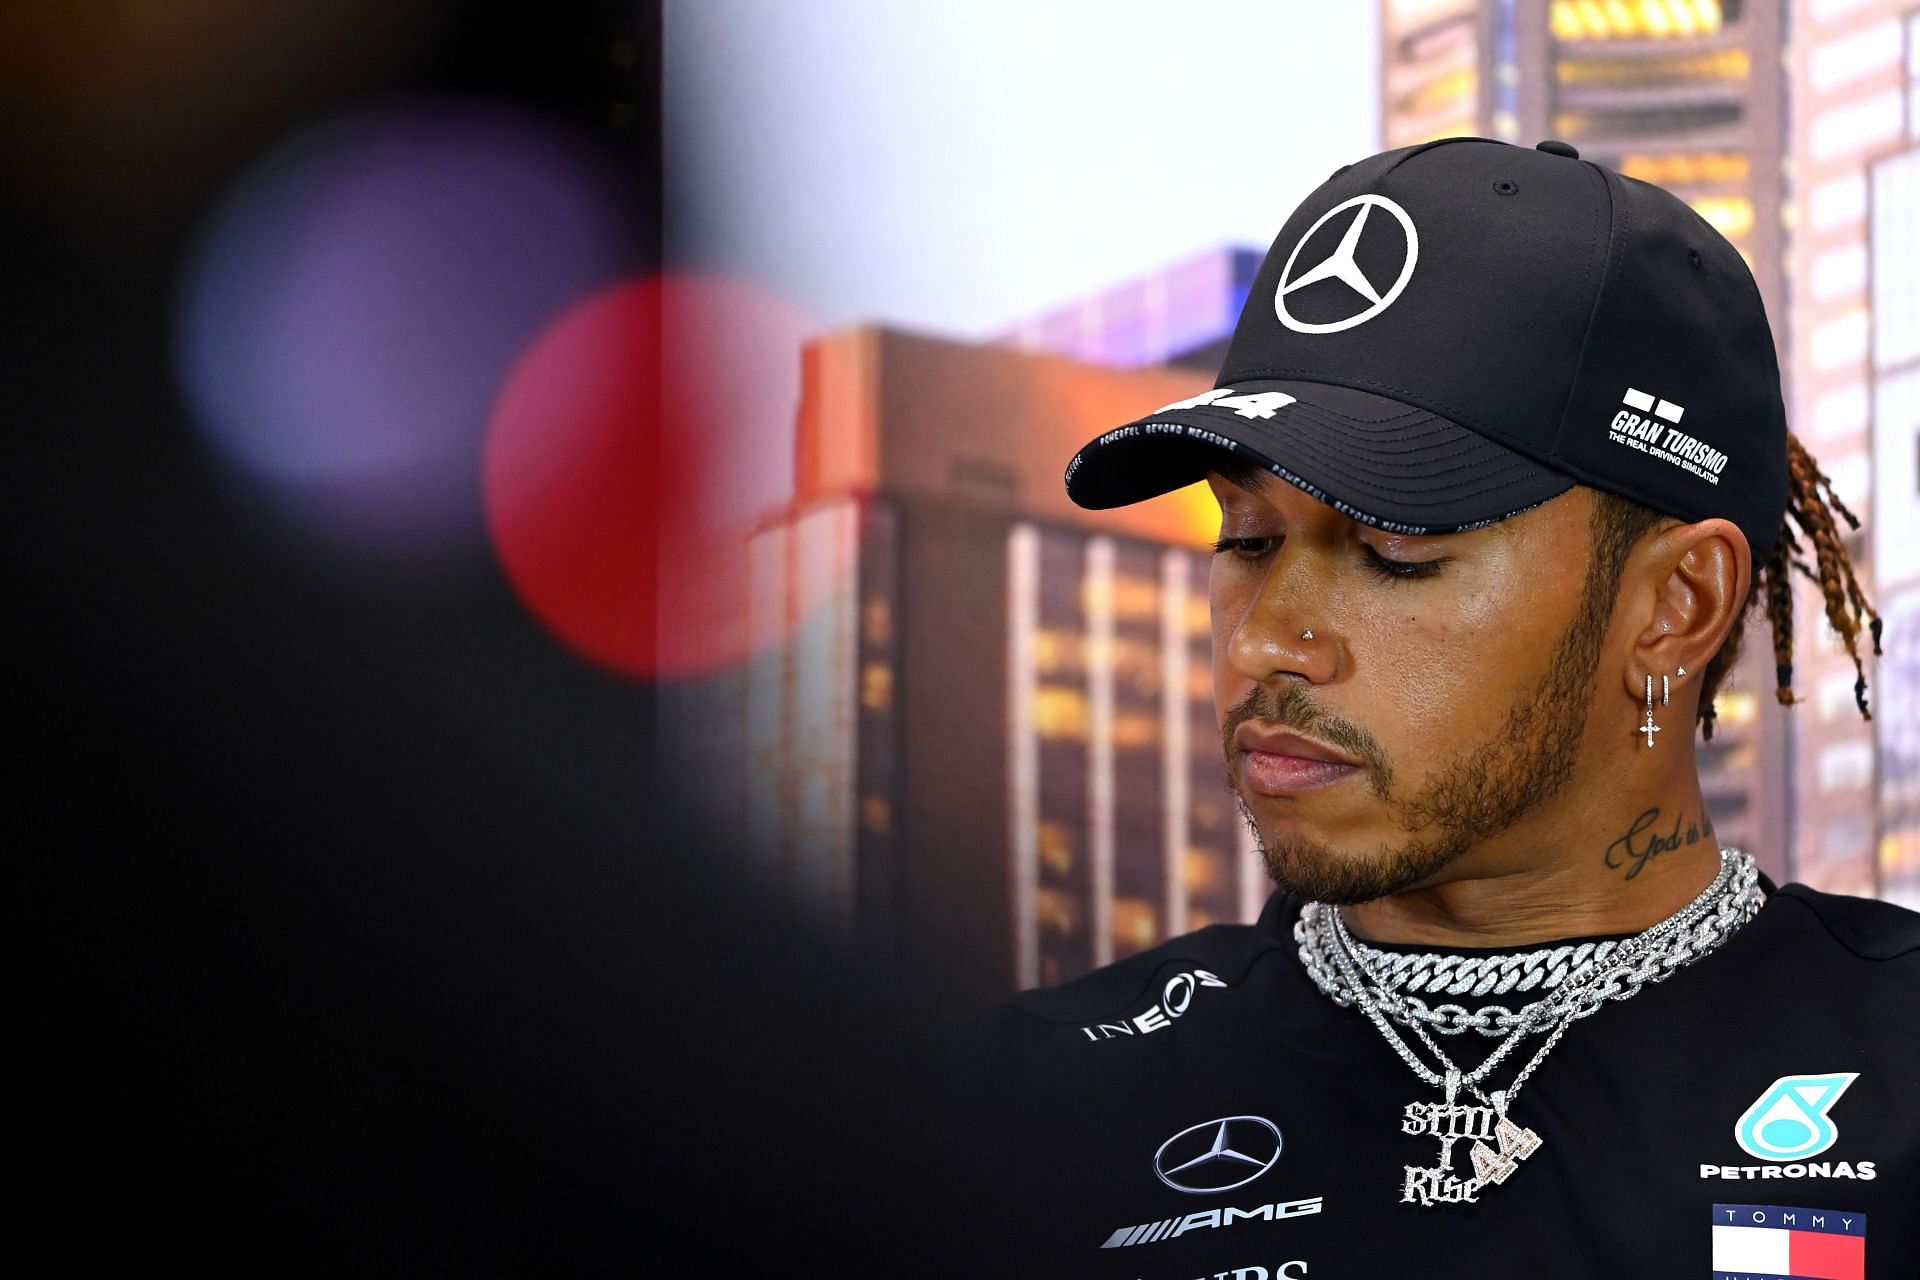 Lewis Hamilton lost his bid for an eighth world championship at the 2021 Abu Dhabi Grand Prix